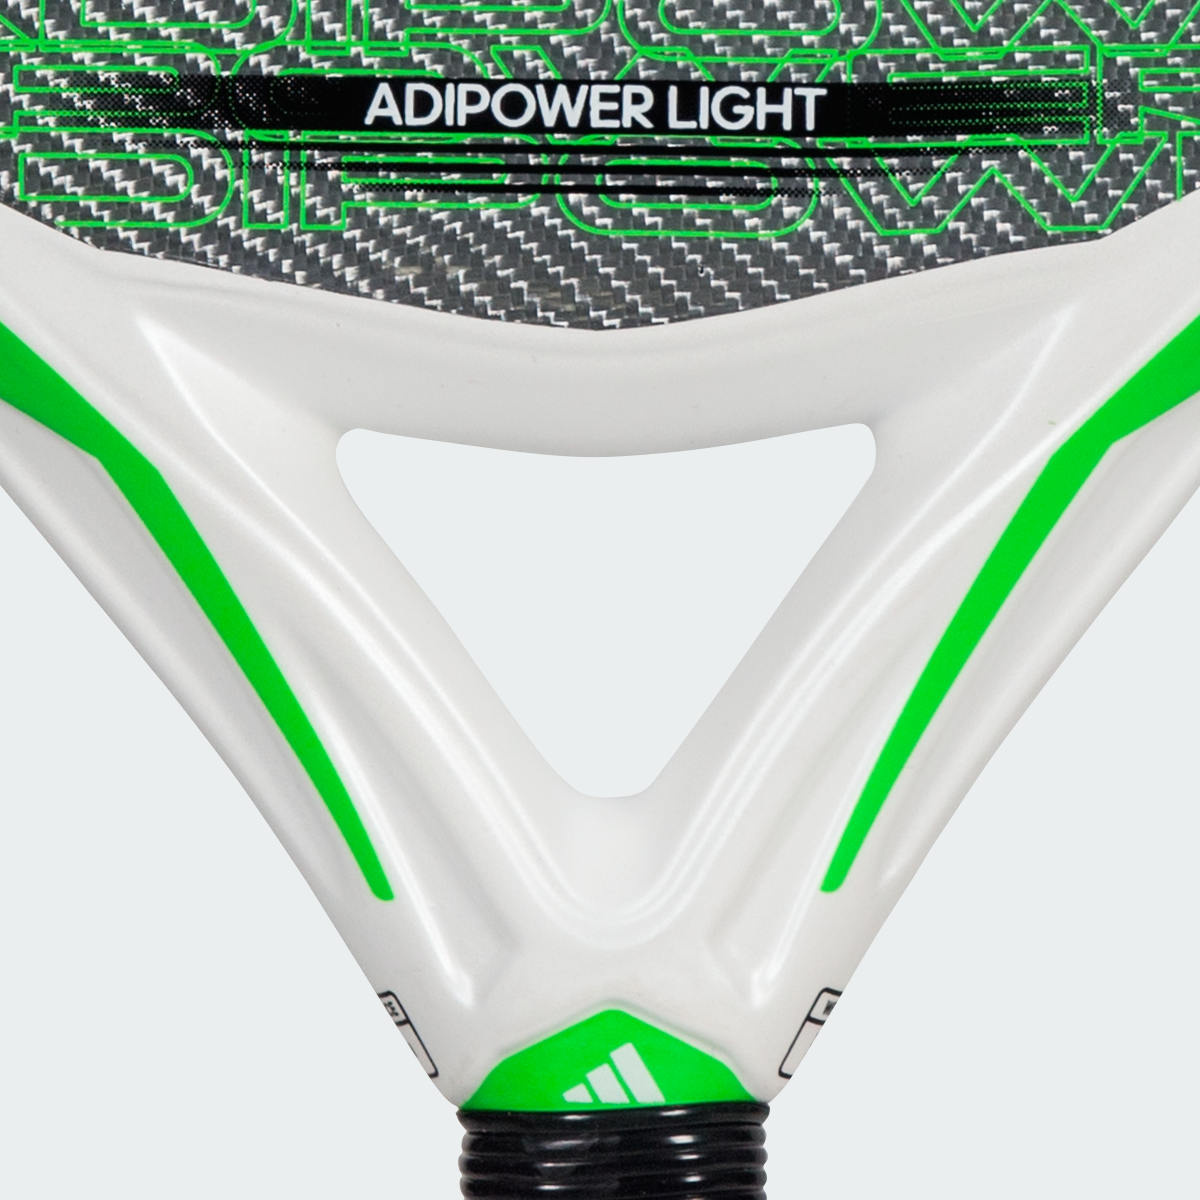 Adidas Pala de pádel Adipower Light 3.3. 5